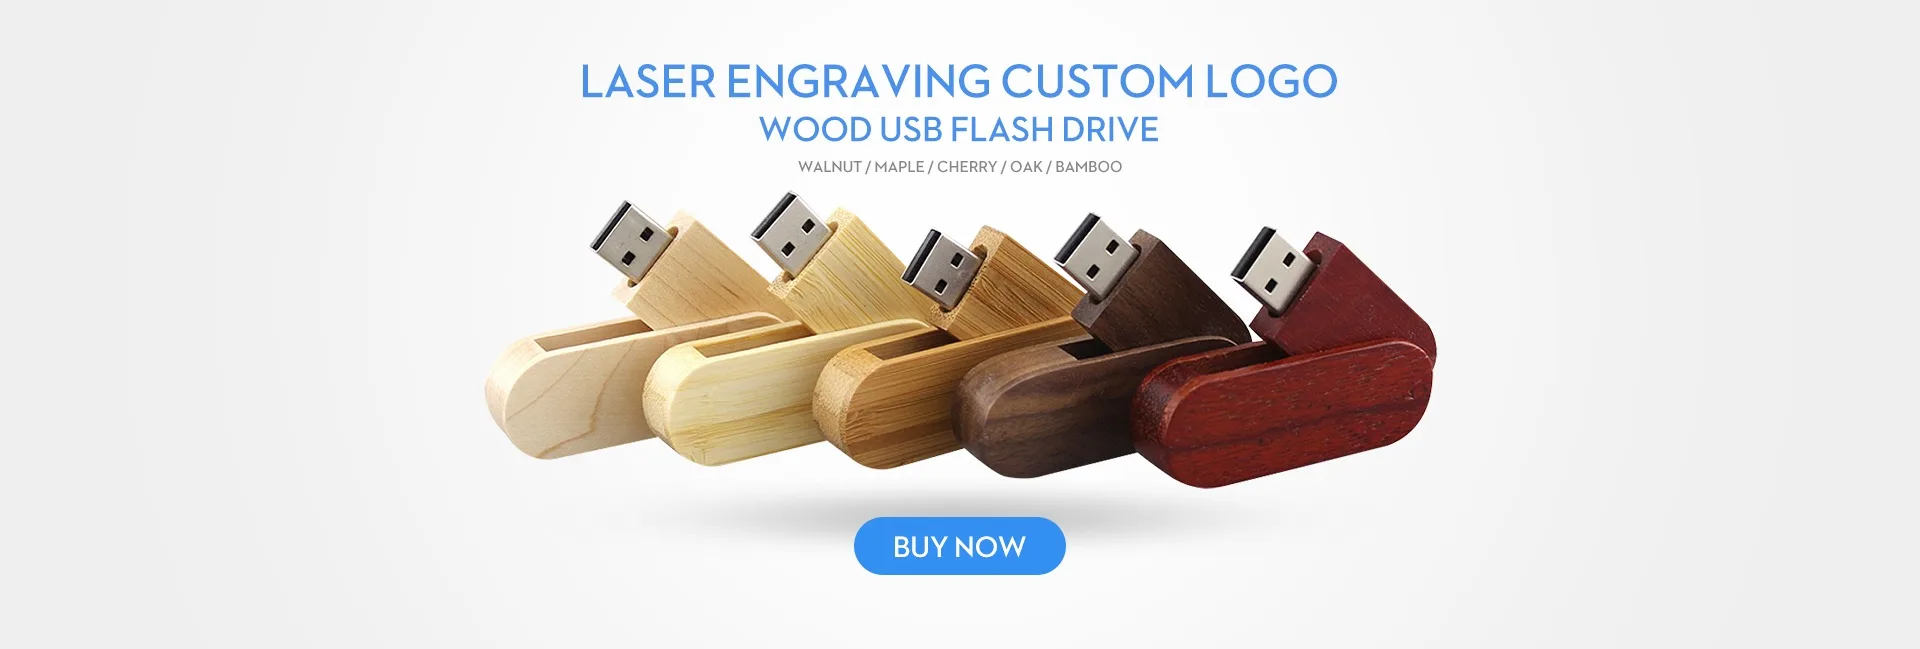 Wooden USB Flash Drive Memory Stick 64GB Cherry